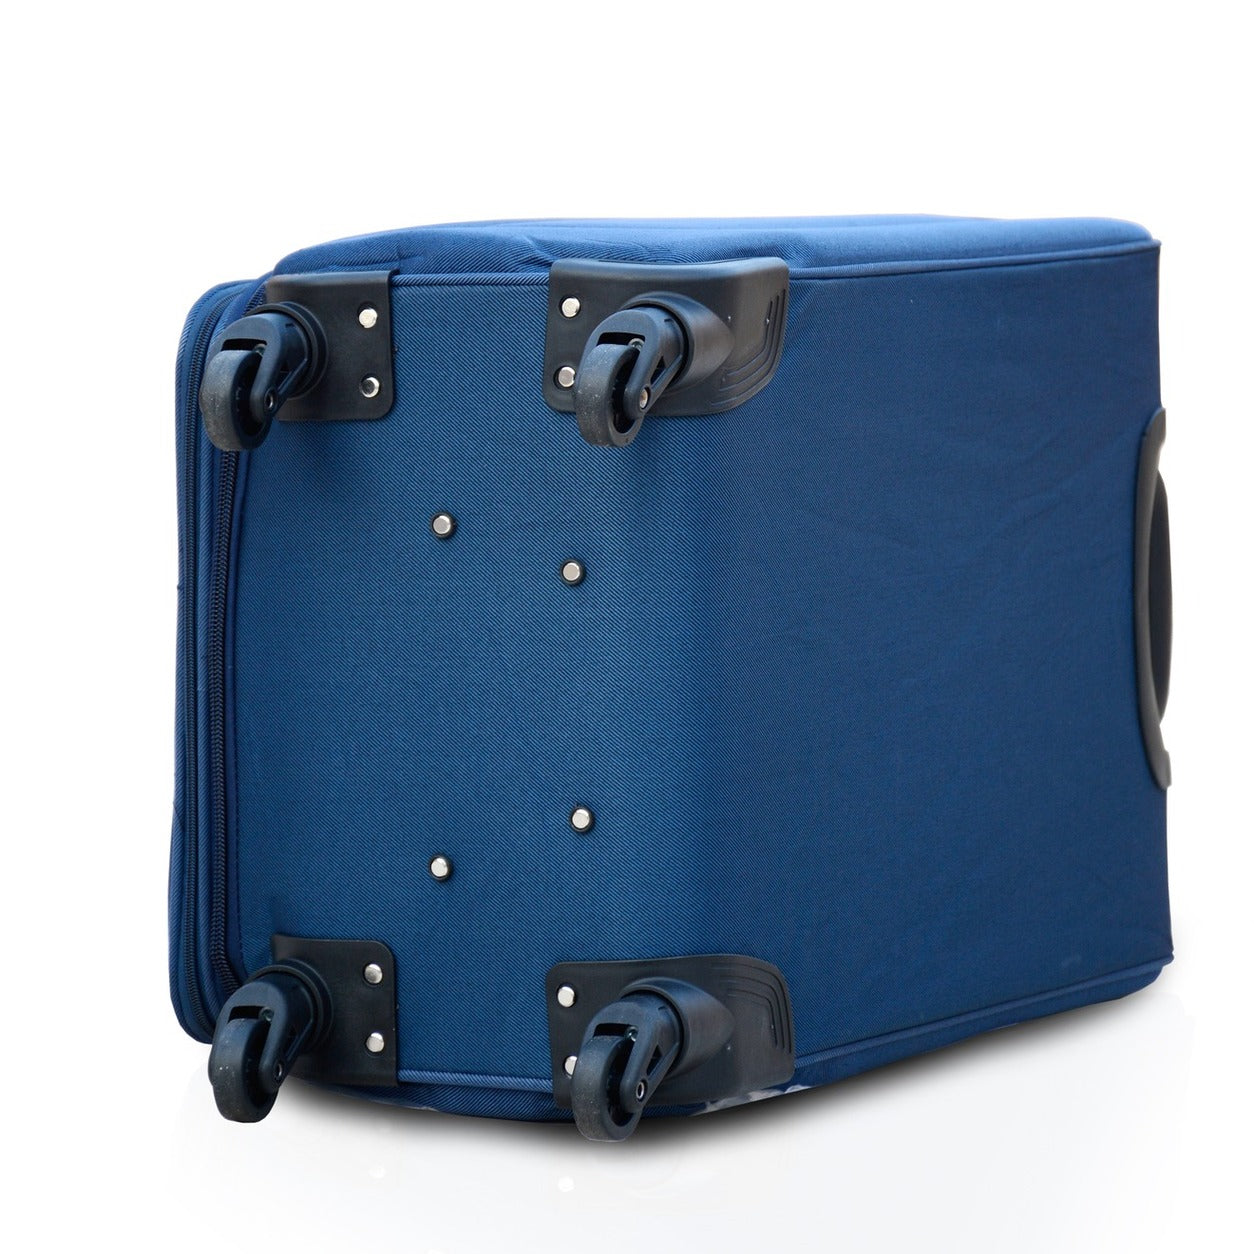 20" Blue Colour SJ JIAN 4 Wheel Luggage Lightweight Soft Material Carry On Trolley Bag Zaappy.com